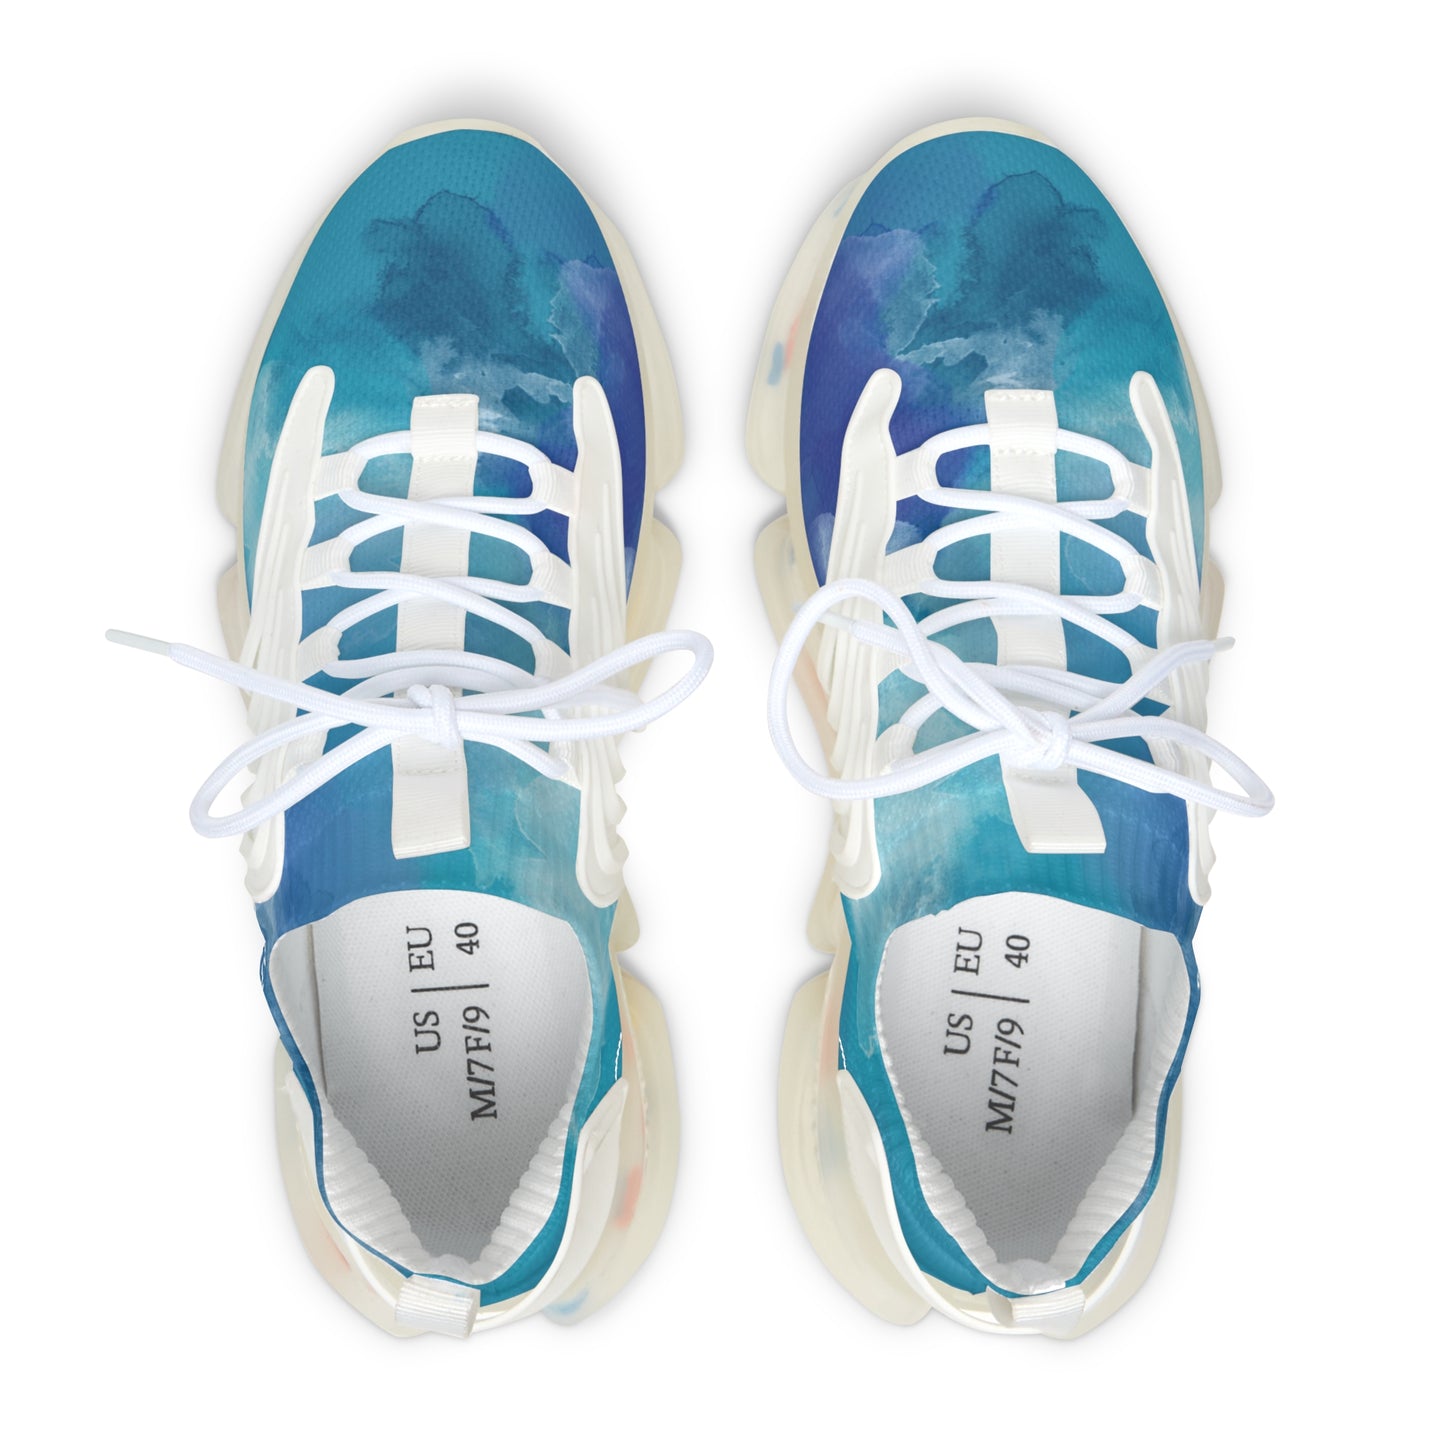 Aqua (Turquoise bg) Sneakers